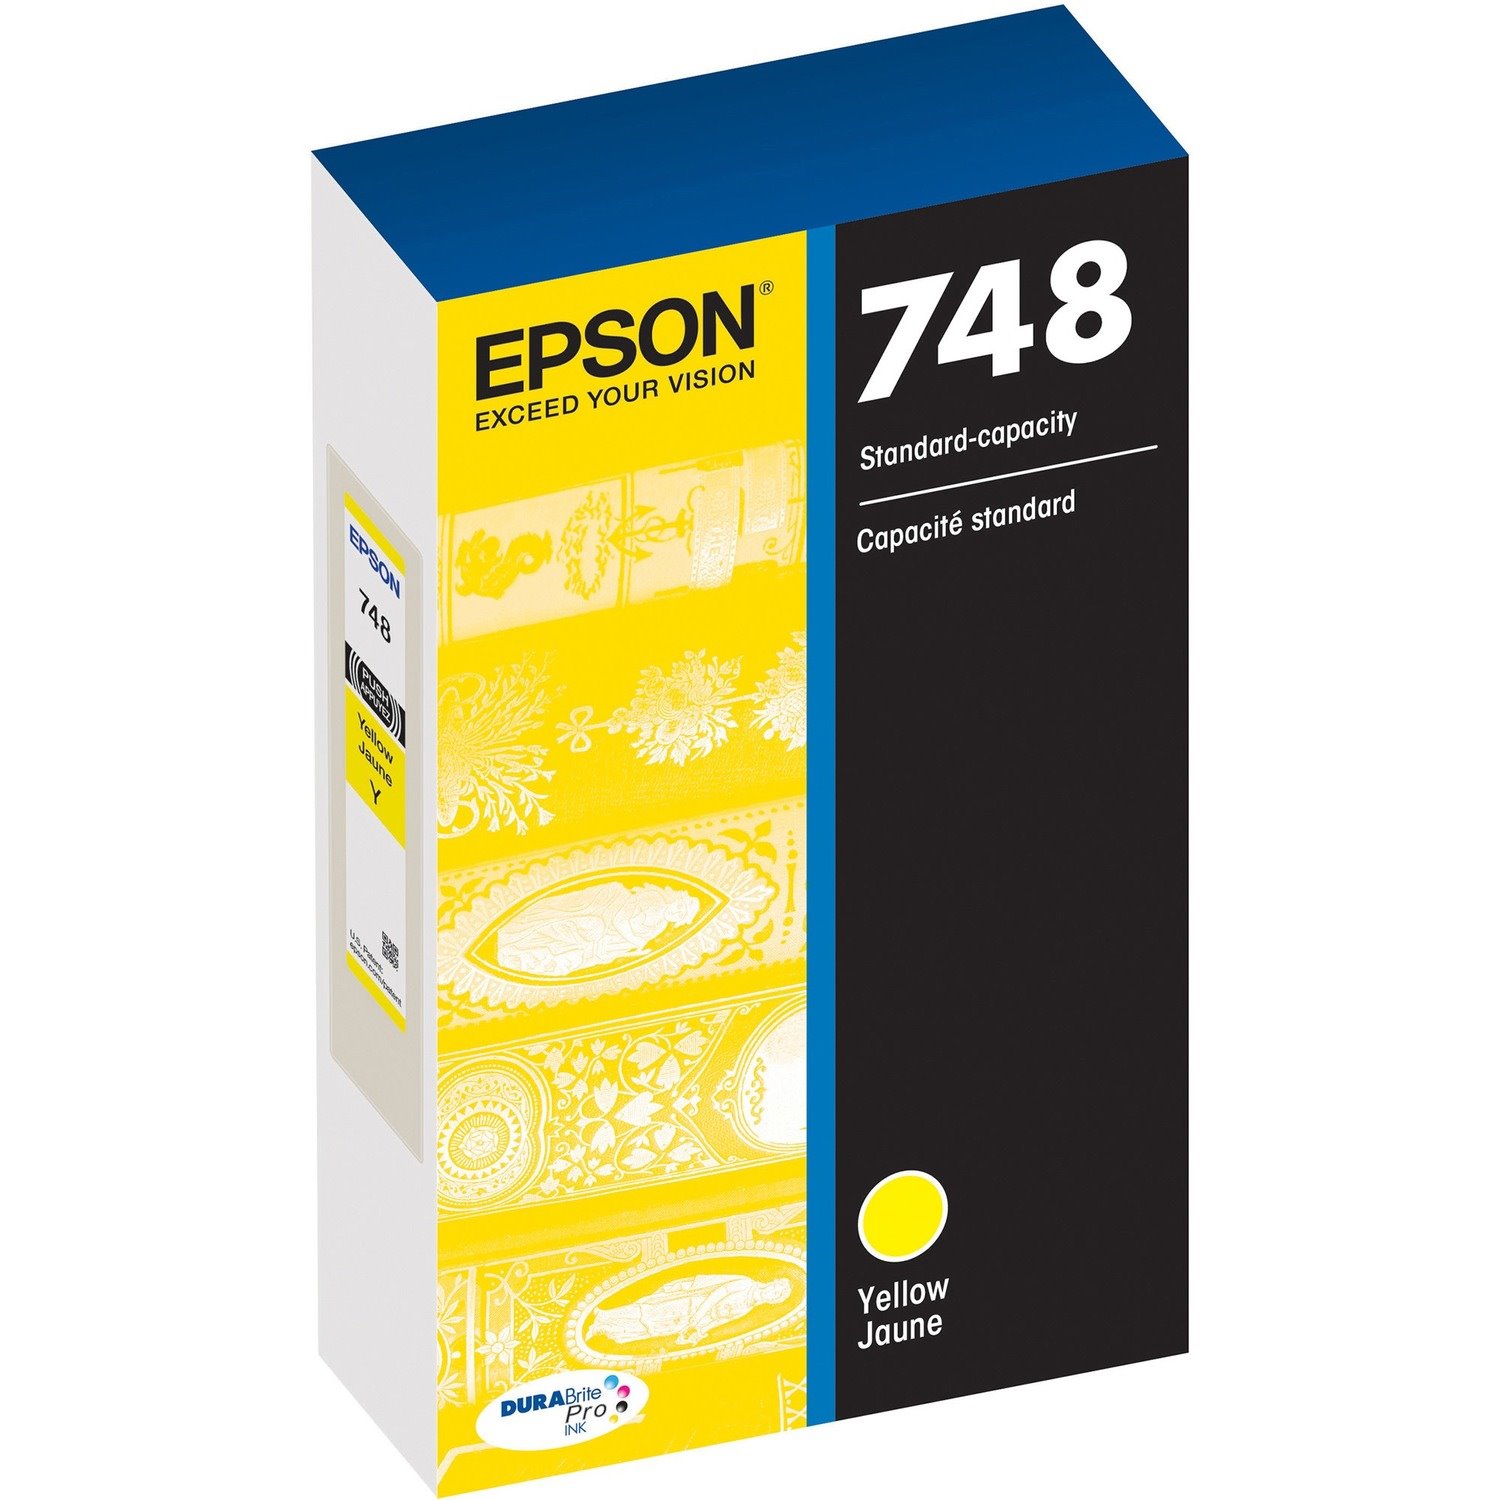 Epson DURABrite Pro 748 Original Standard Yield Inkjet Ink Cartridge - Yellow - 1 Each